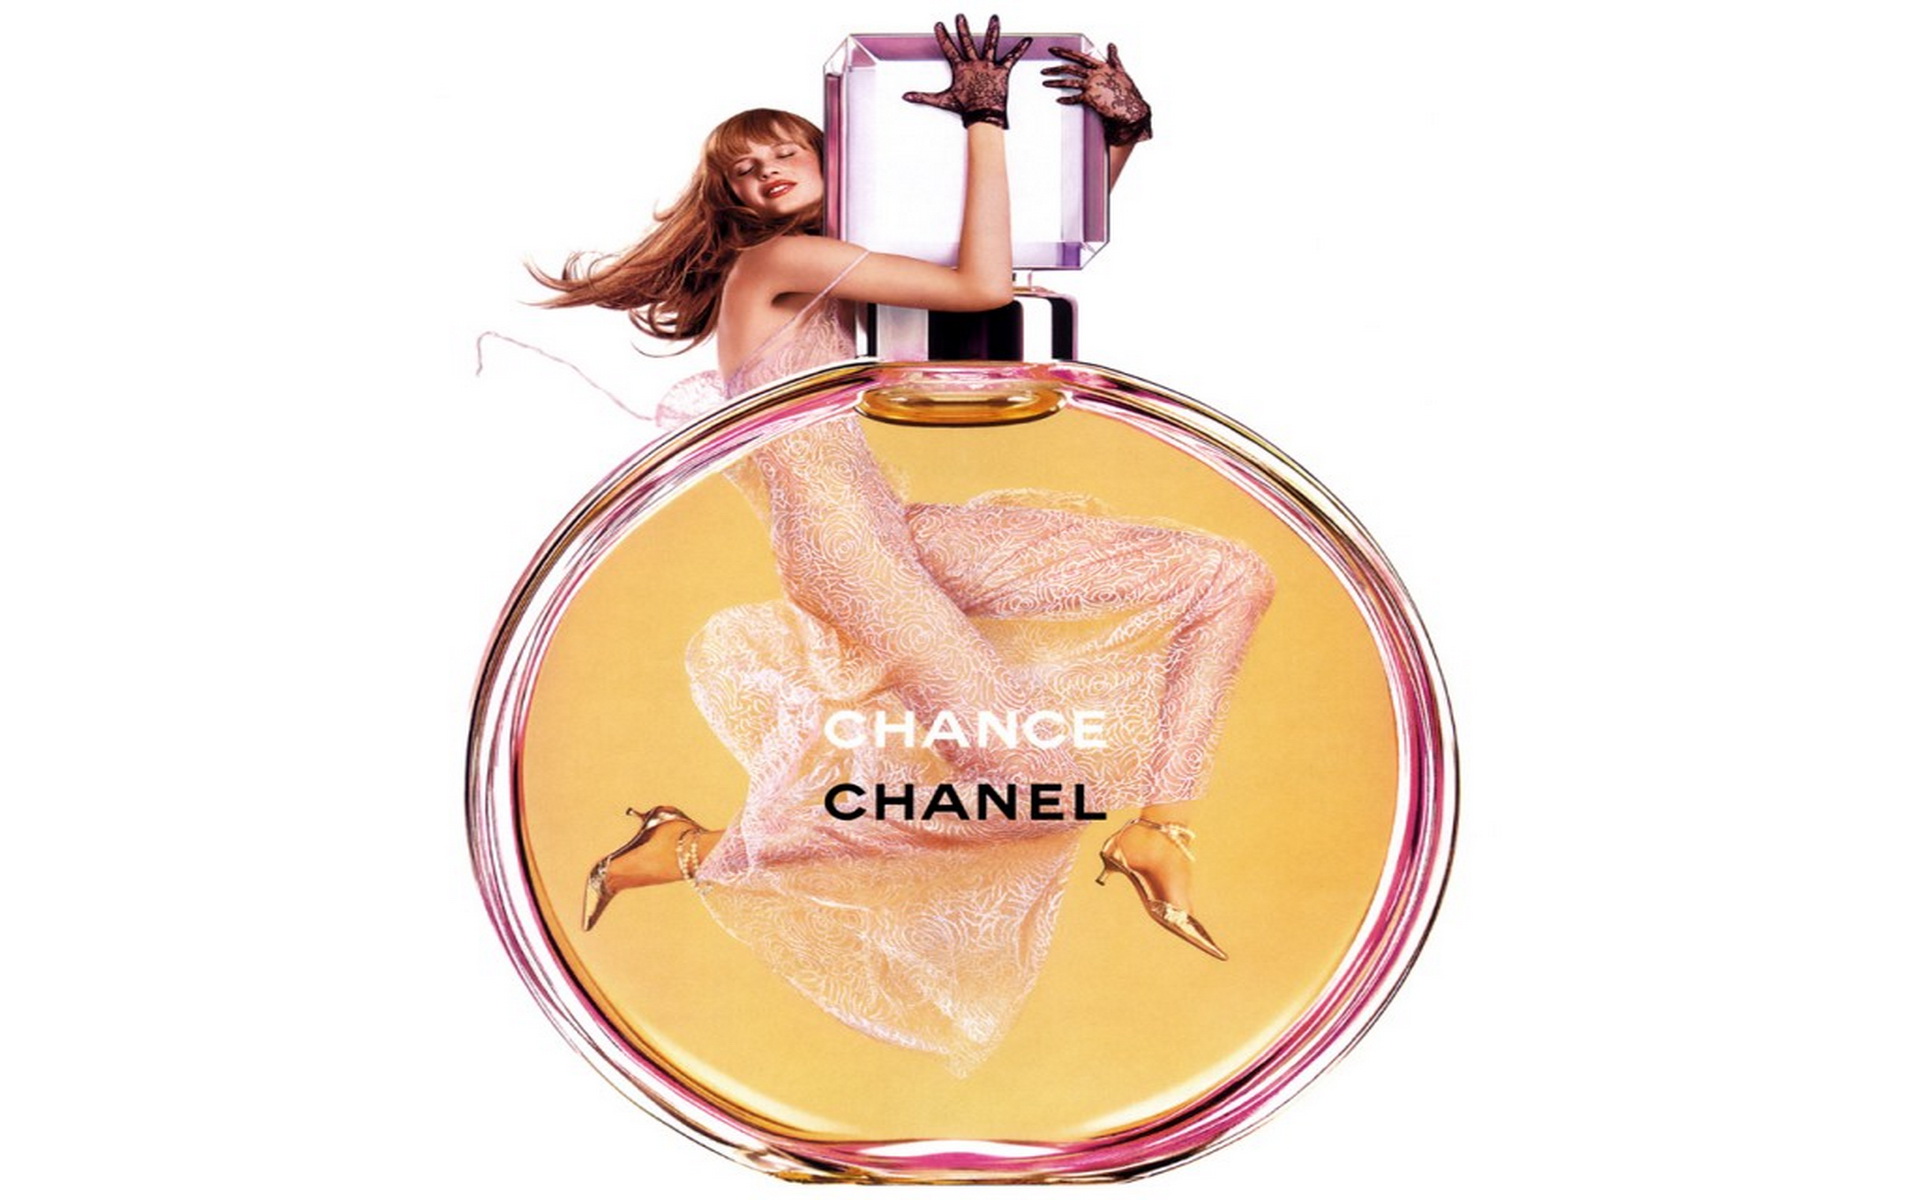 Chanel chance lady mini 7,5ml парфюм купить на febio.ru за 10519 р! цена, бесплатная доставка, отзывы, скидки.